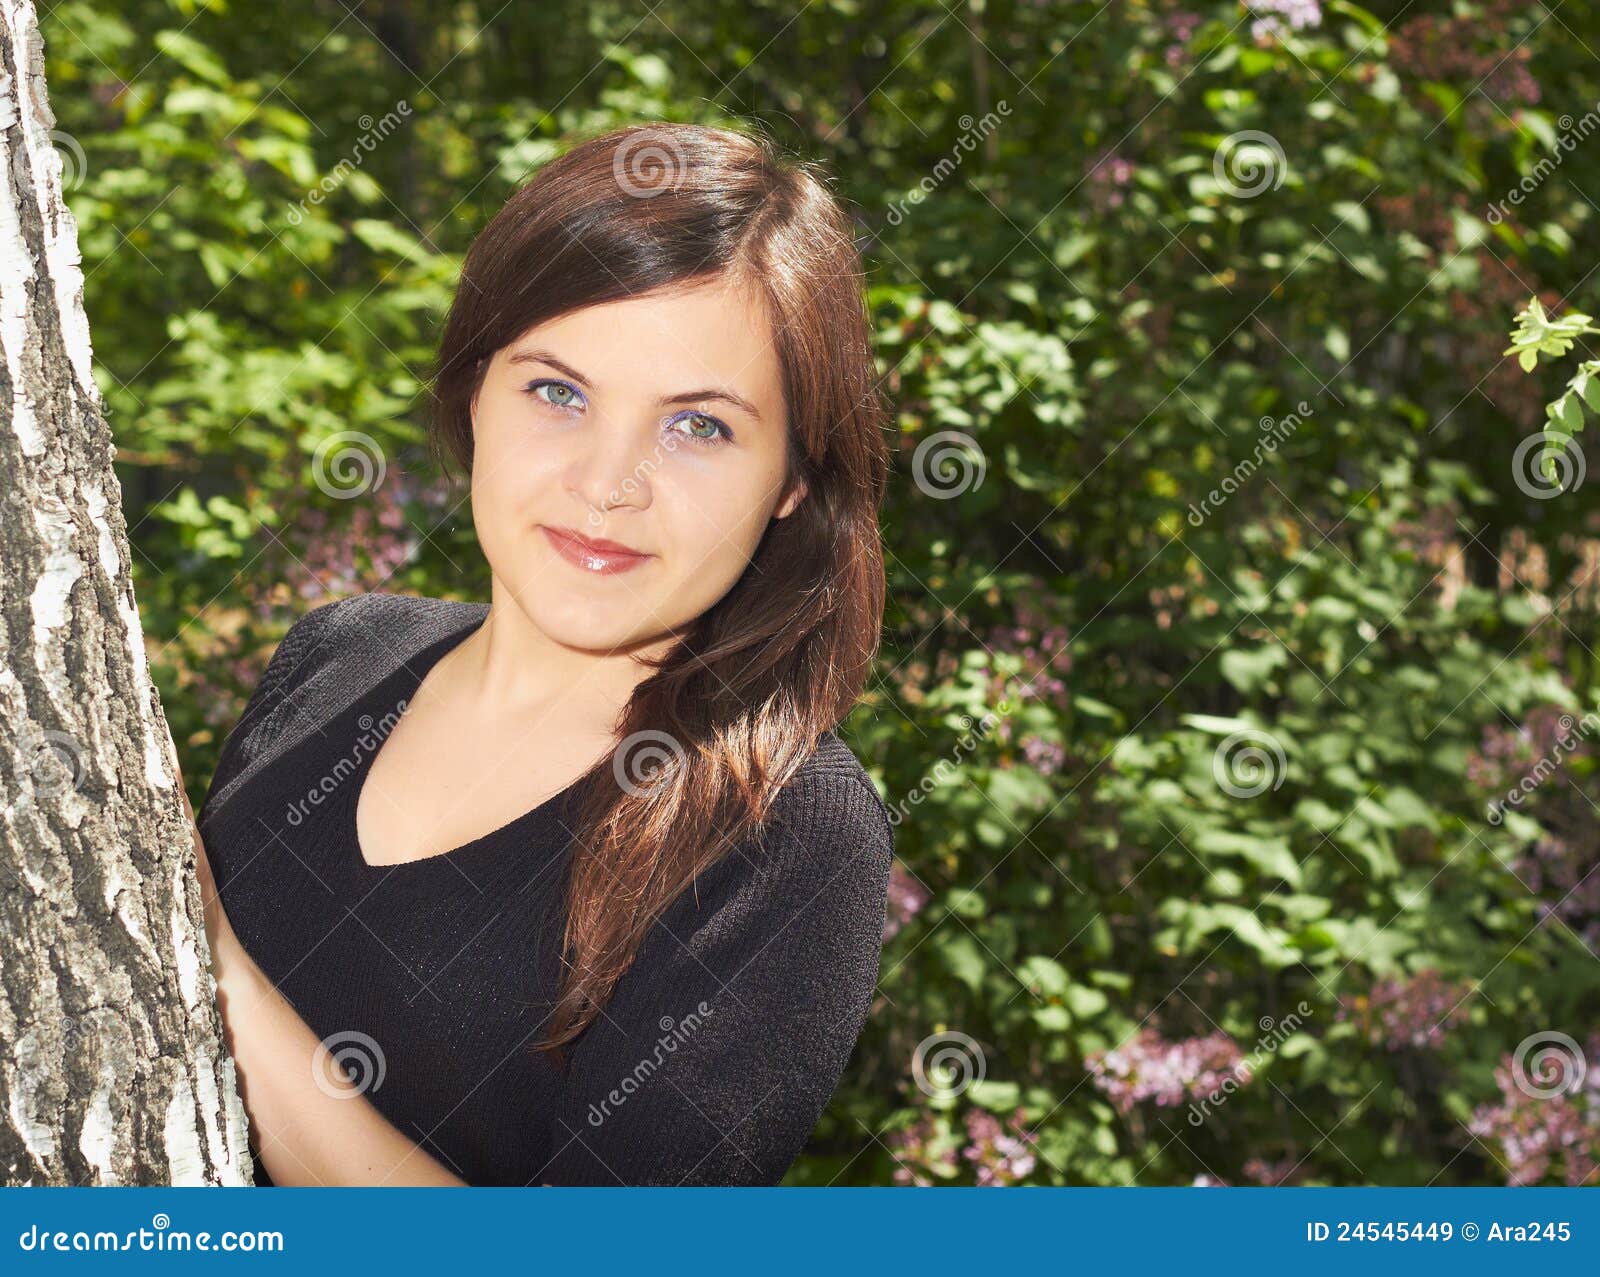 Young girl near birch stock image. Image of human, birch - 24545449